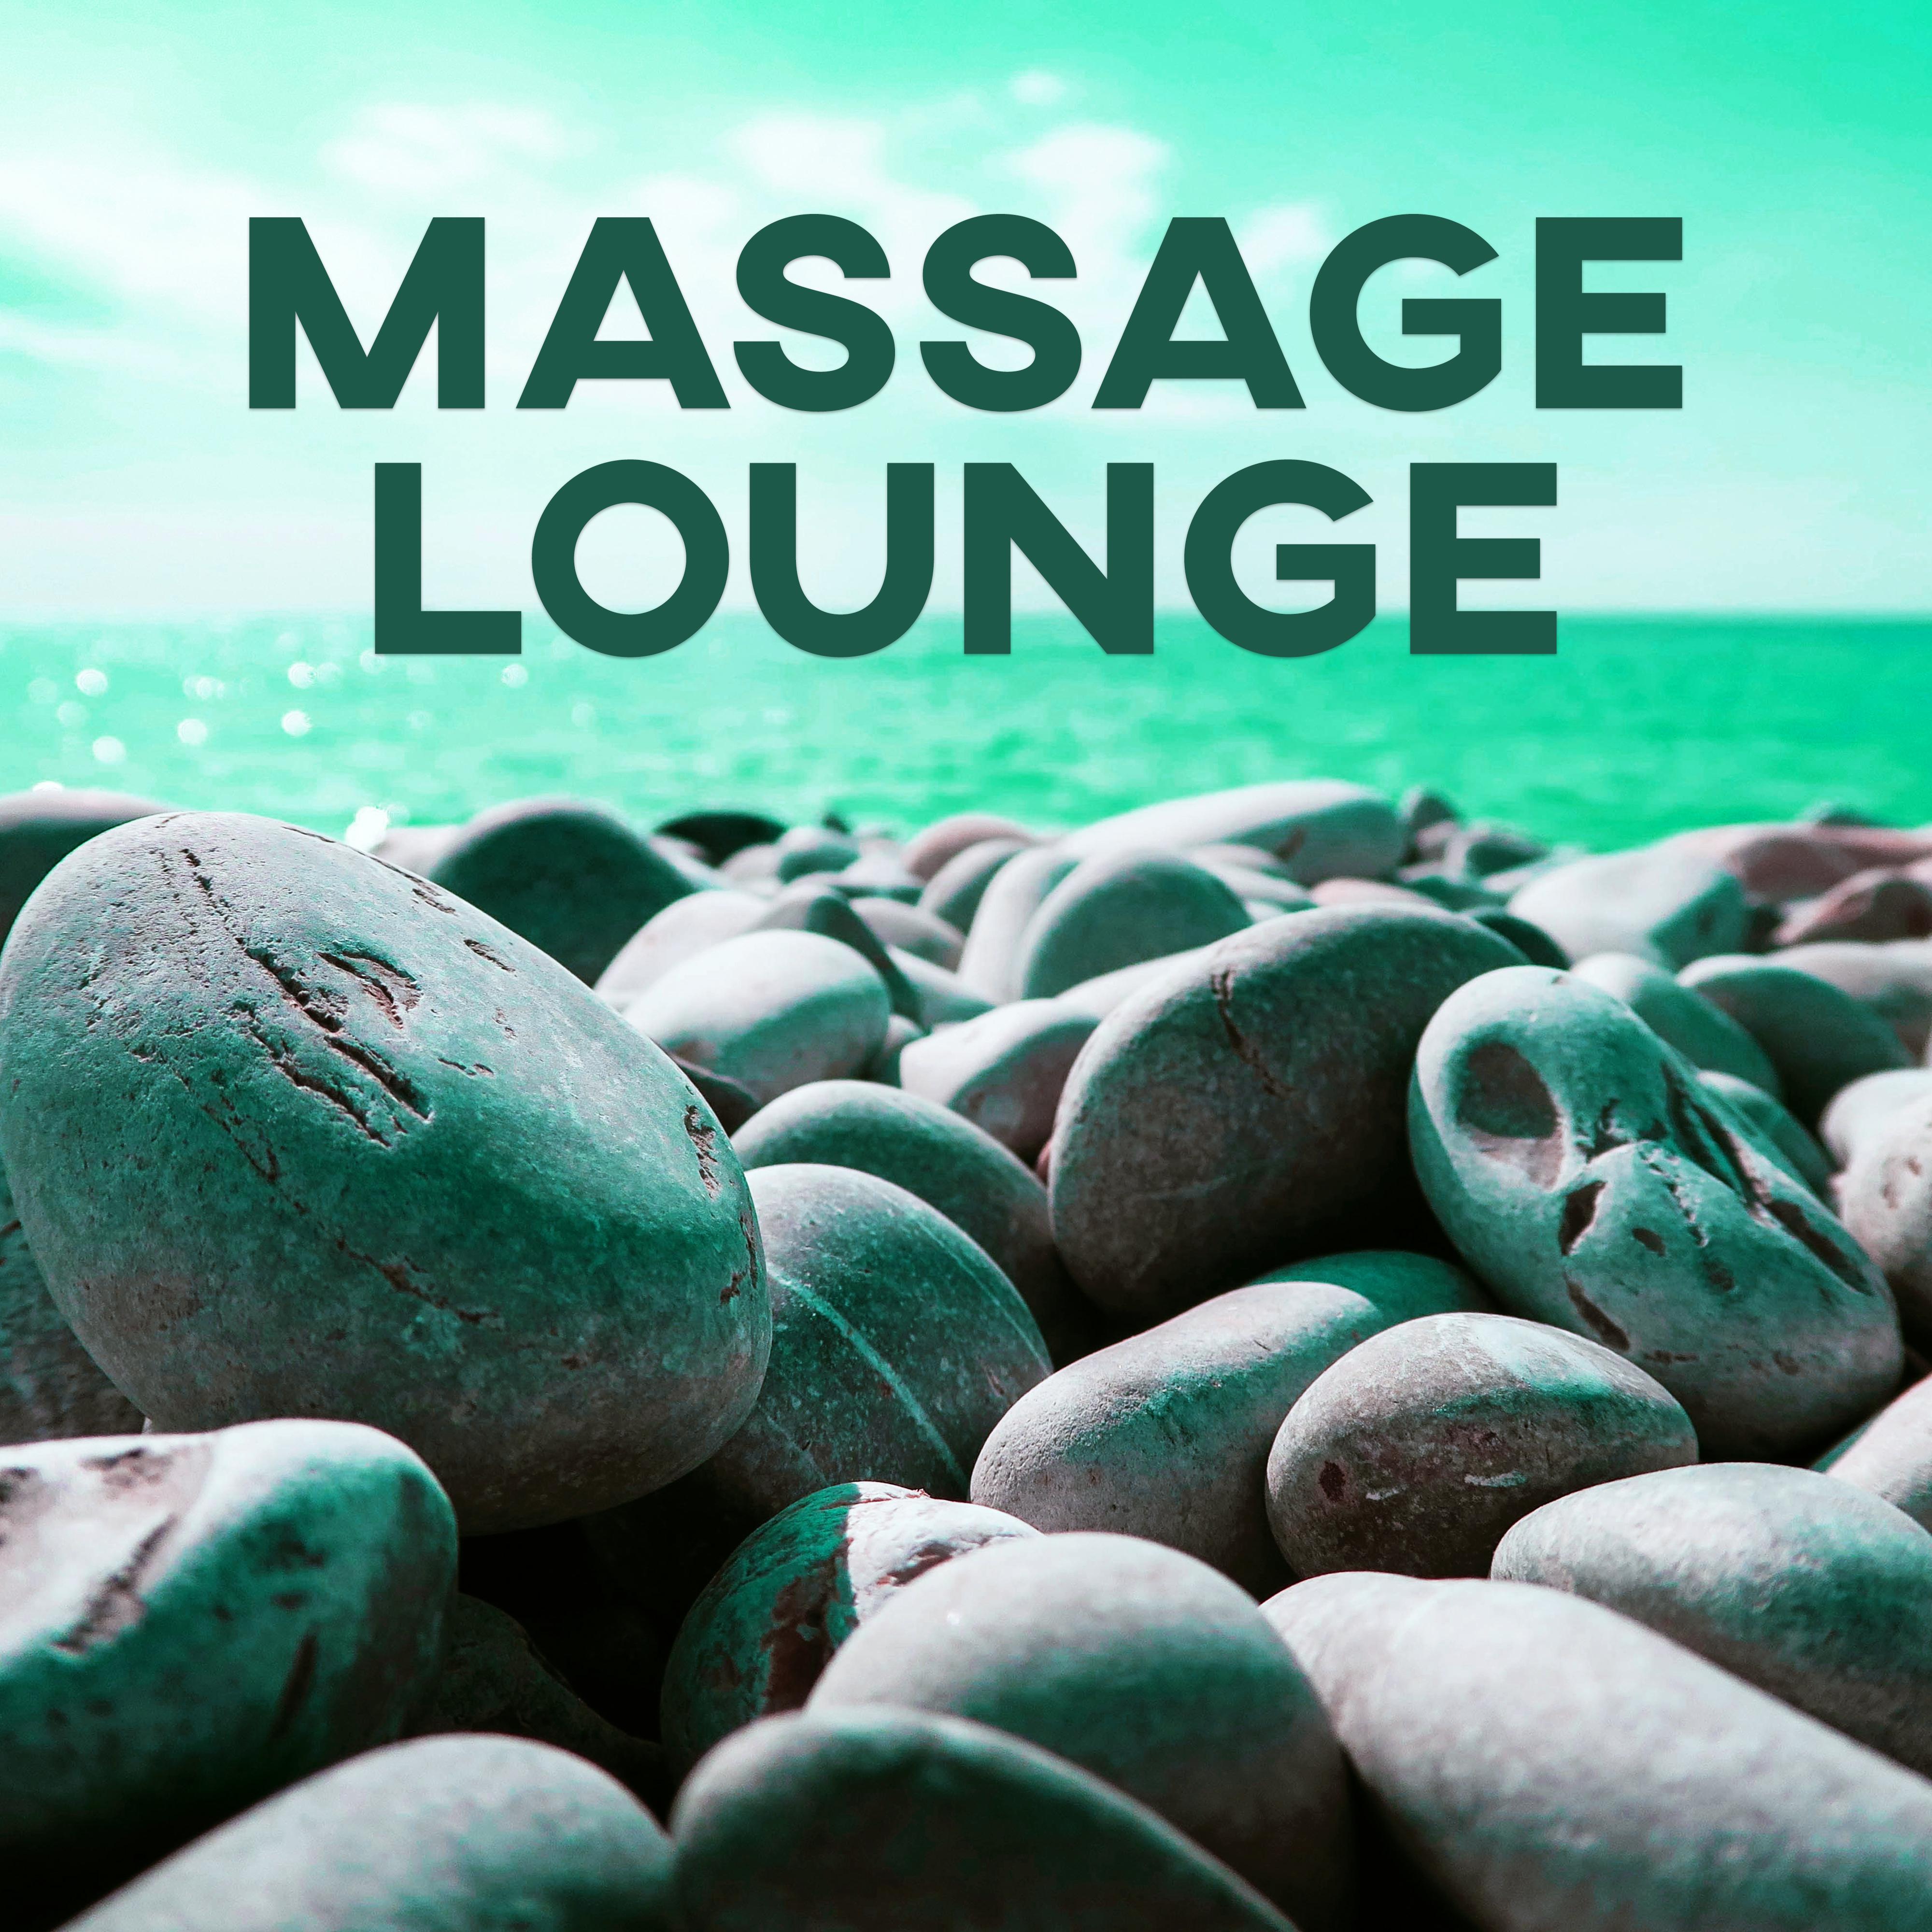 Massage Lounge  Spa Music, Sensual Sounds of Nature for Massage, Romantic Music, Relaxing Massage